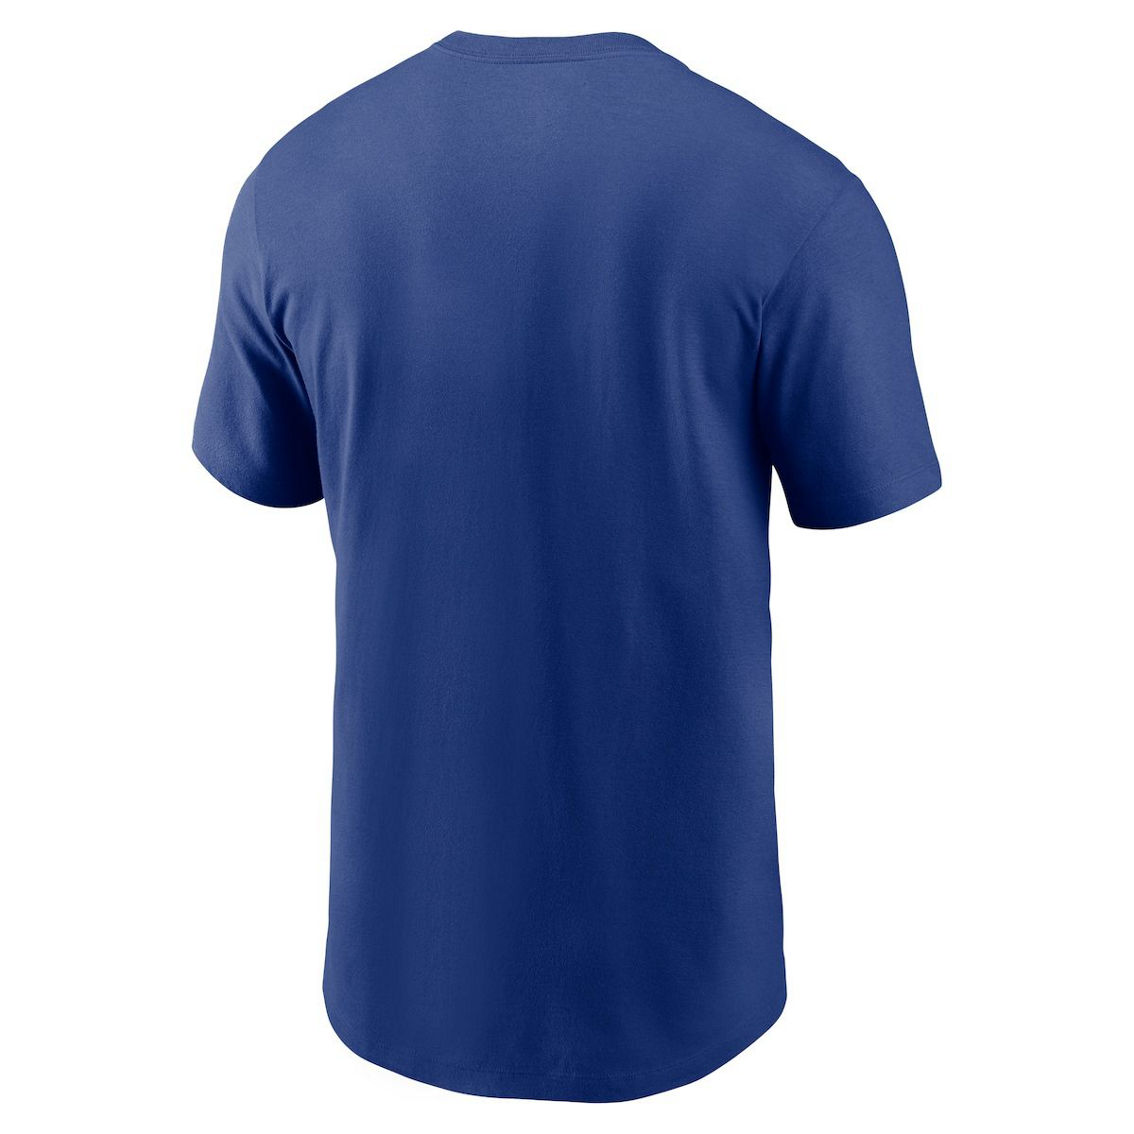 Nike Men's Royal New York Giants Primary Logo T-Shirt - Image 4 of 4